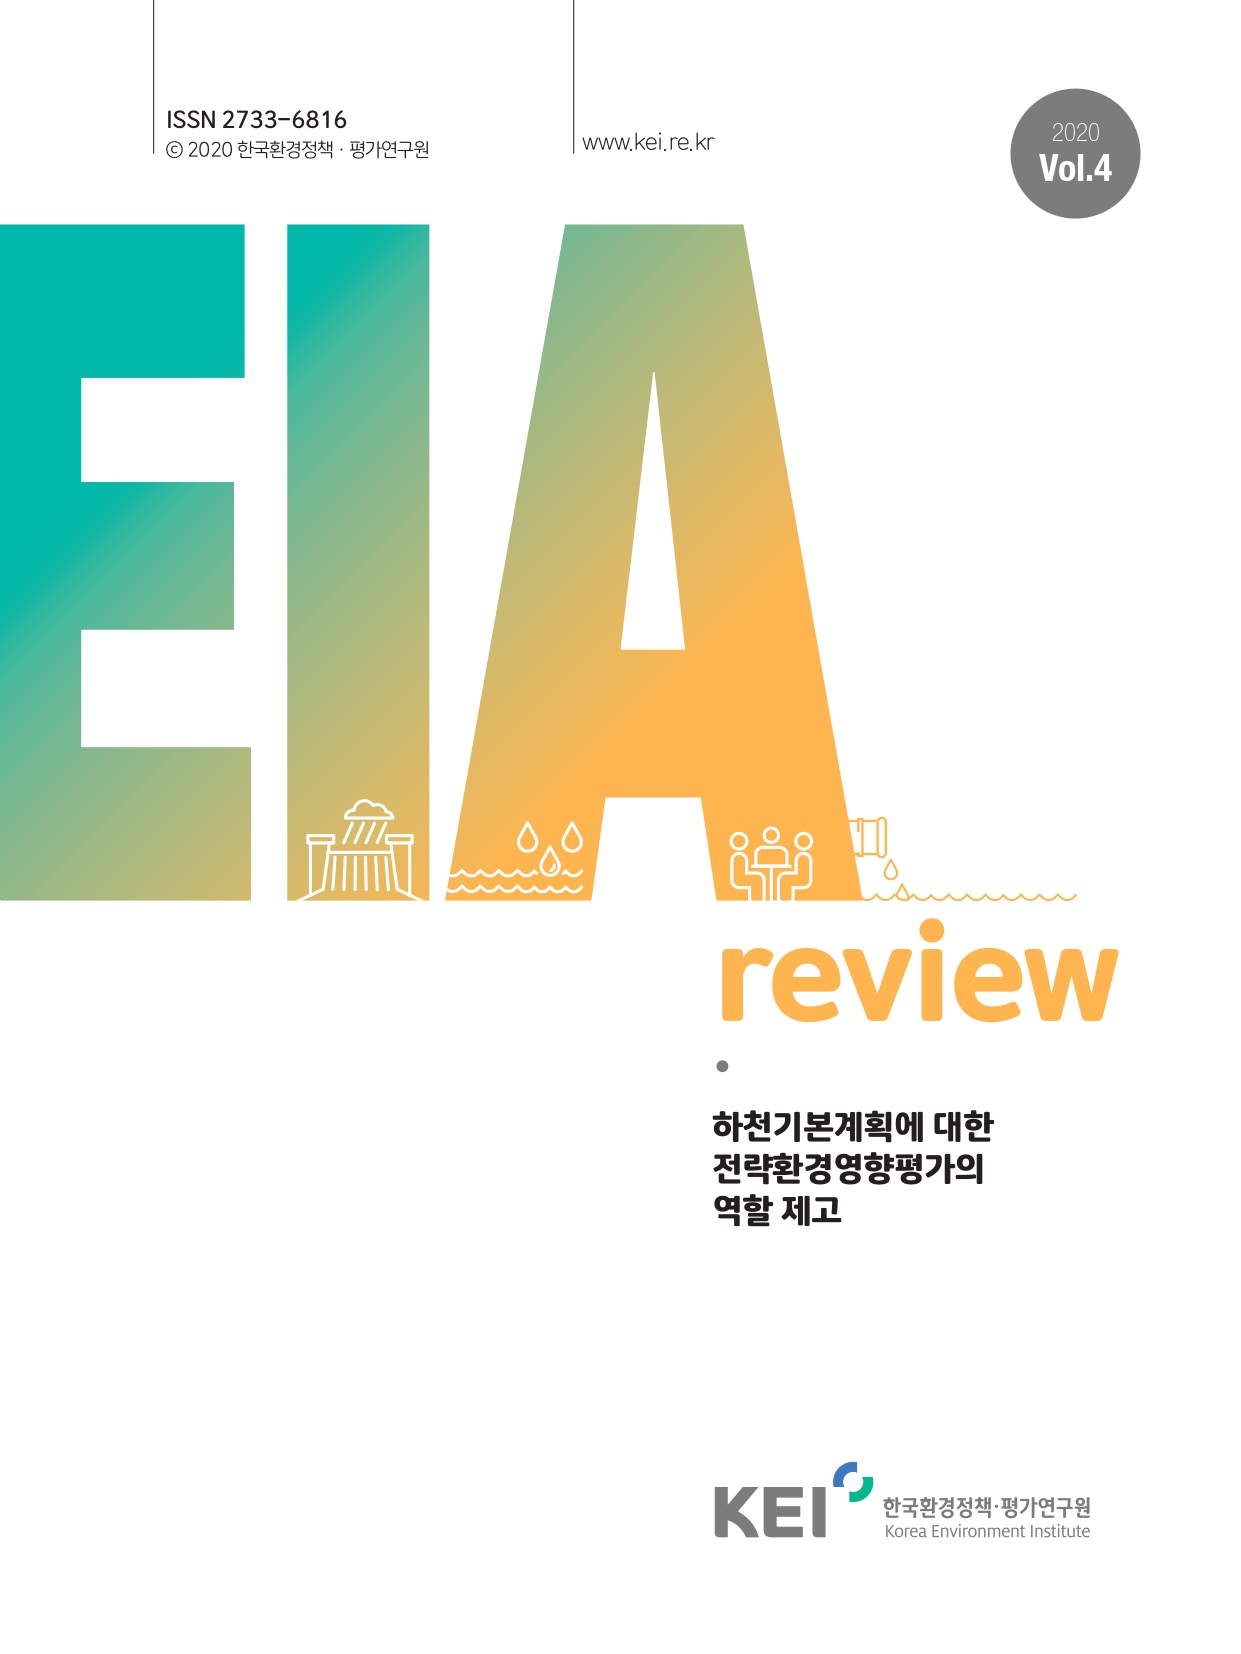 EIA Review 04호 하천기본계획에 대한 전략환경영향평가의 역할 제고에 대한 내용입니다. 자세한 내용은 첨부파일을 확인해주세요.